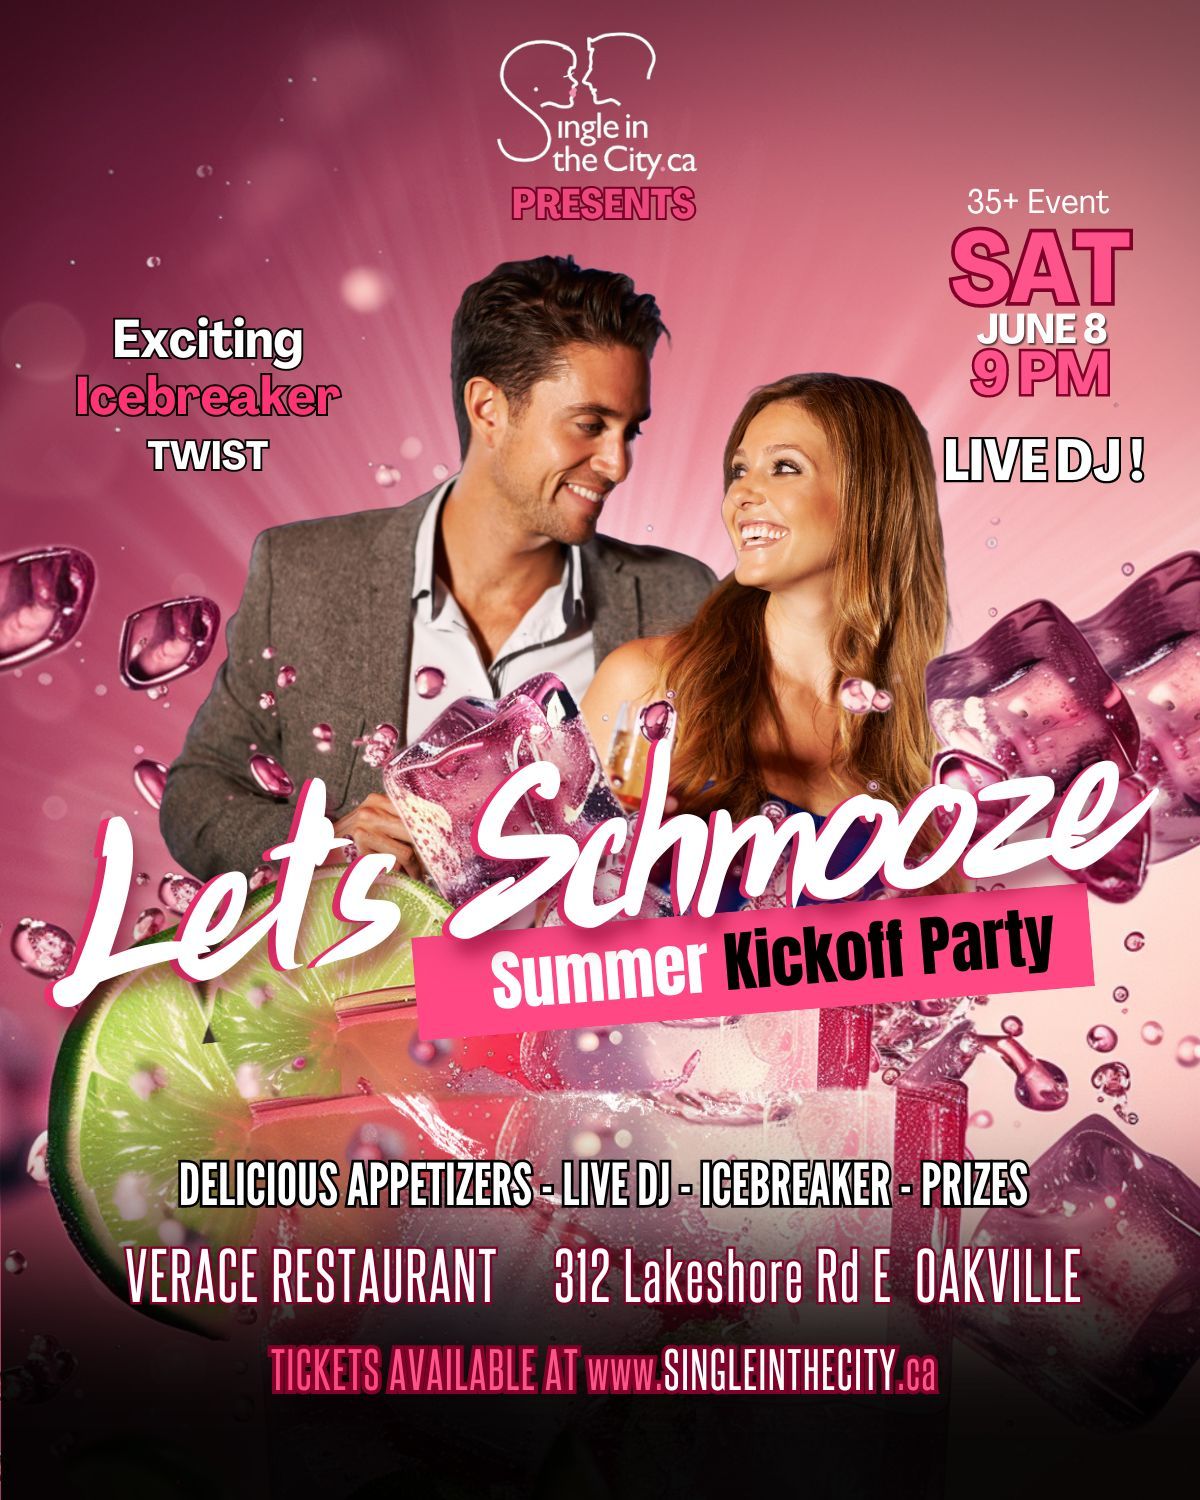 "Let's Schmooze\u201d Oakville Singles Summer Kickoff Party - Over 70% Sold!